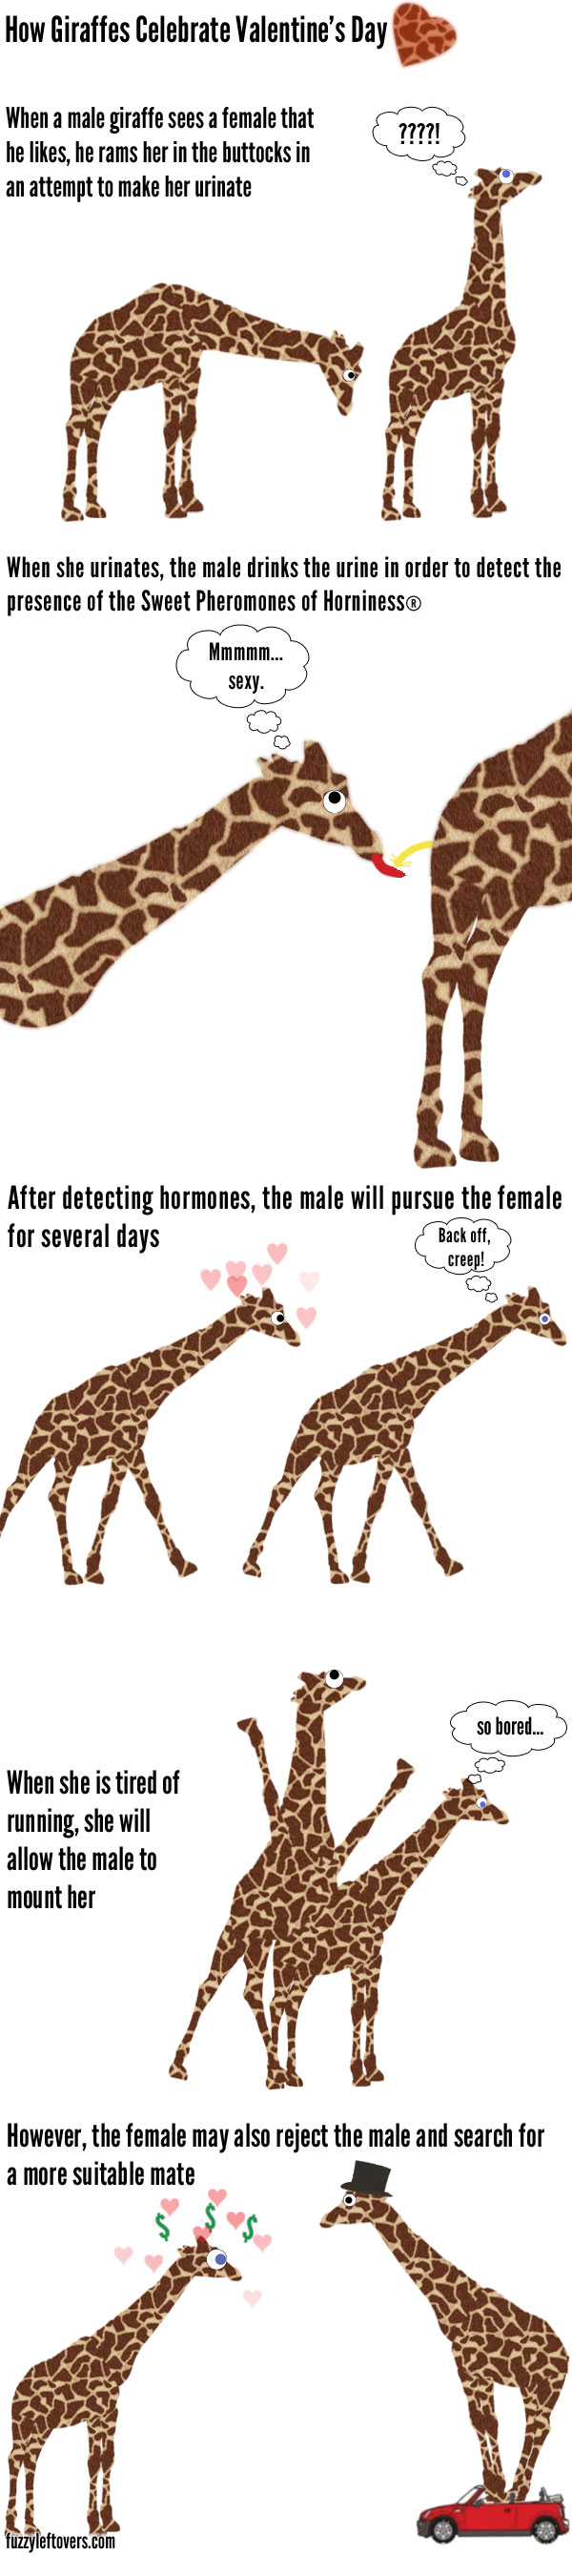 How Giraffes Celebrate Valentine's Day